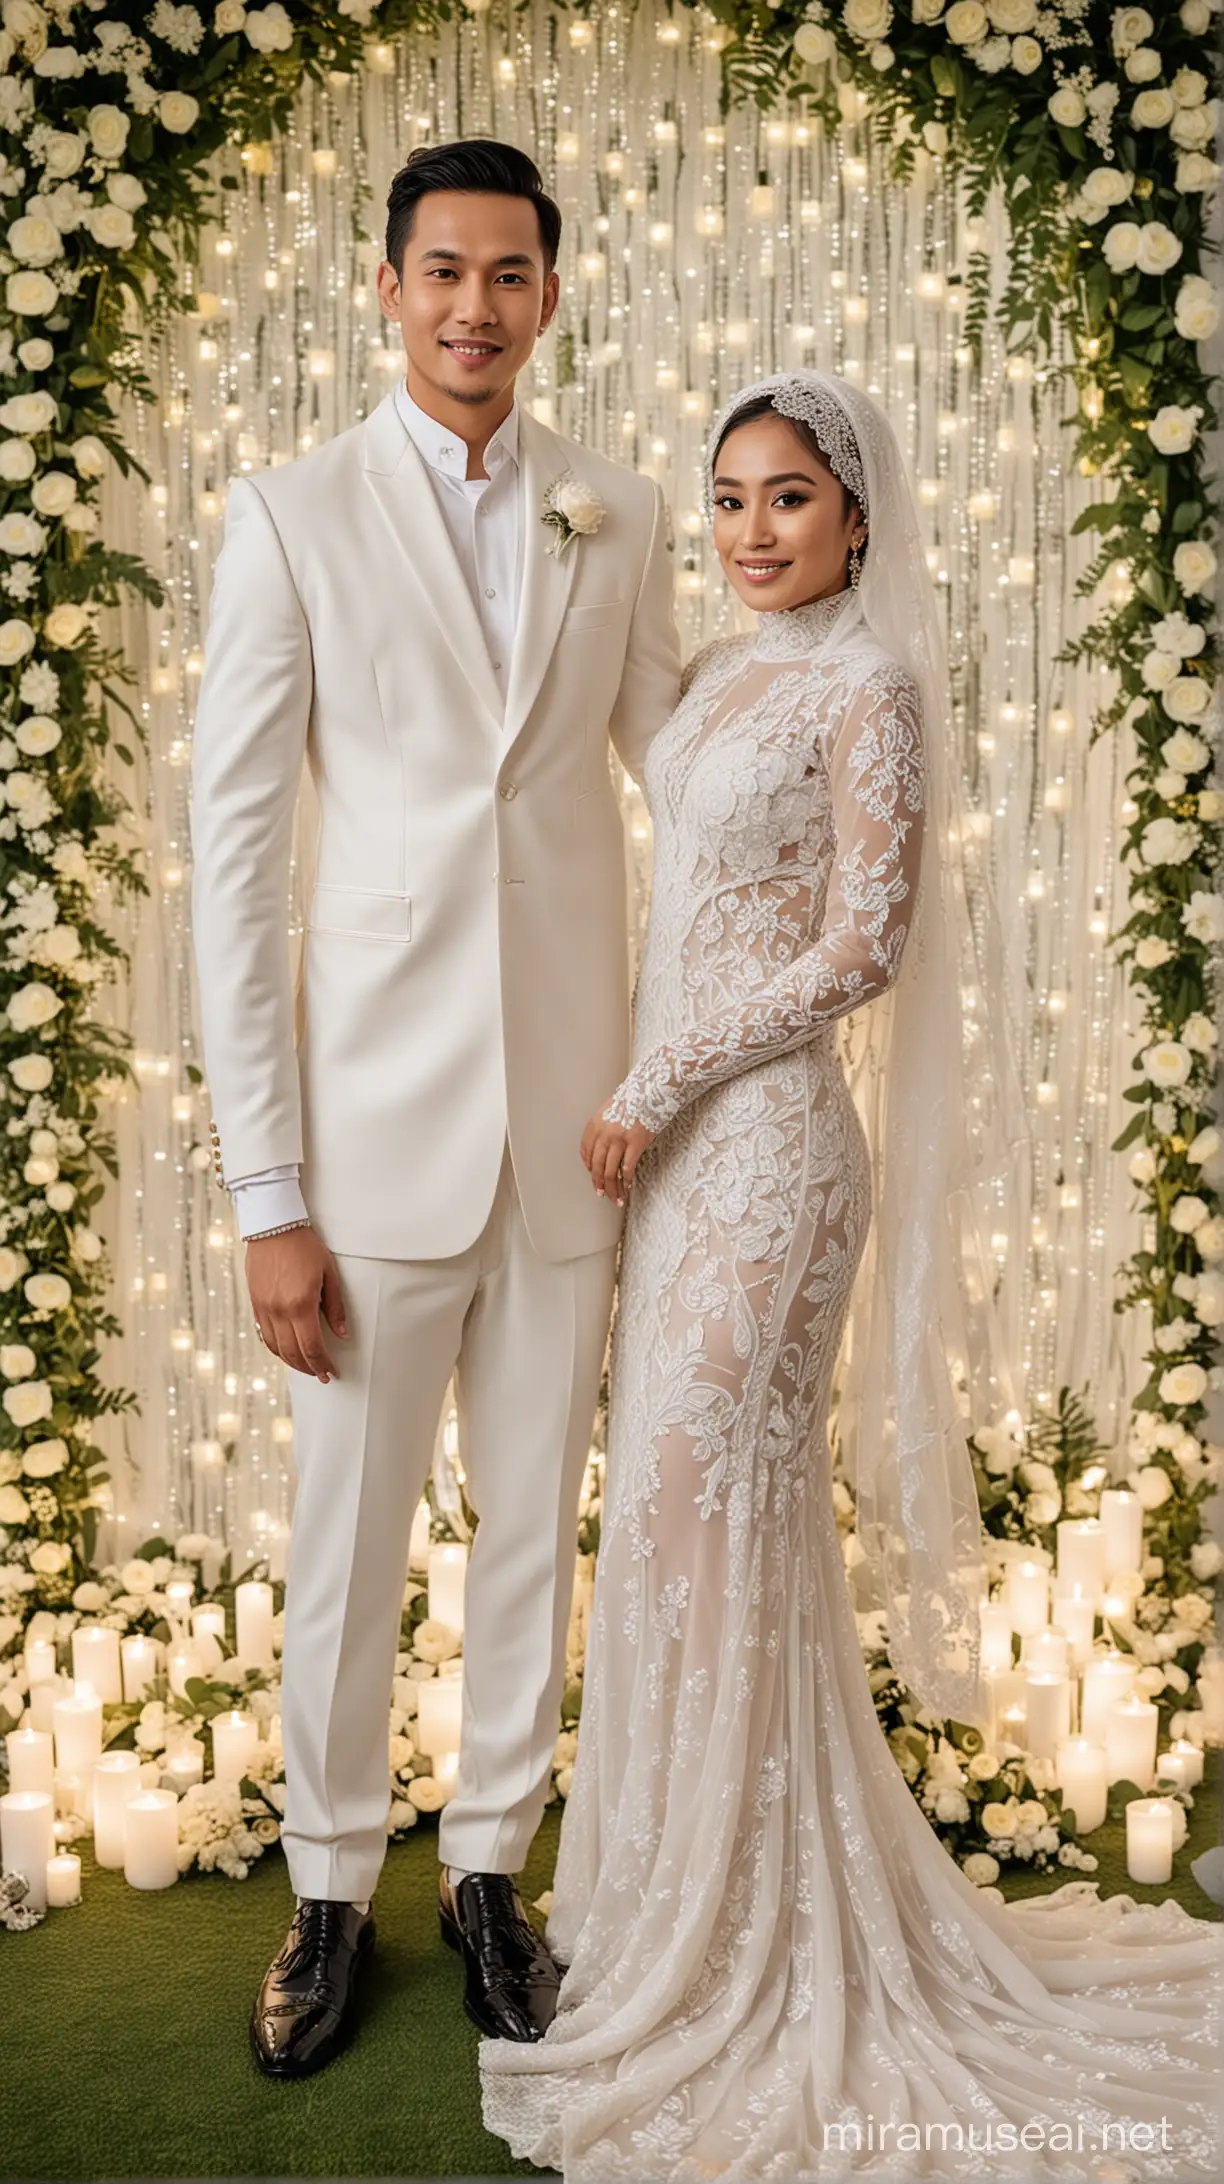 Luxurious Muslim Wedding Intimate Pose of Groom and Bride in Elegant Attire